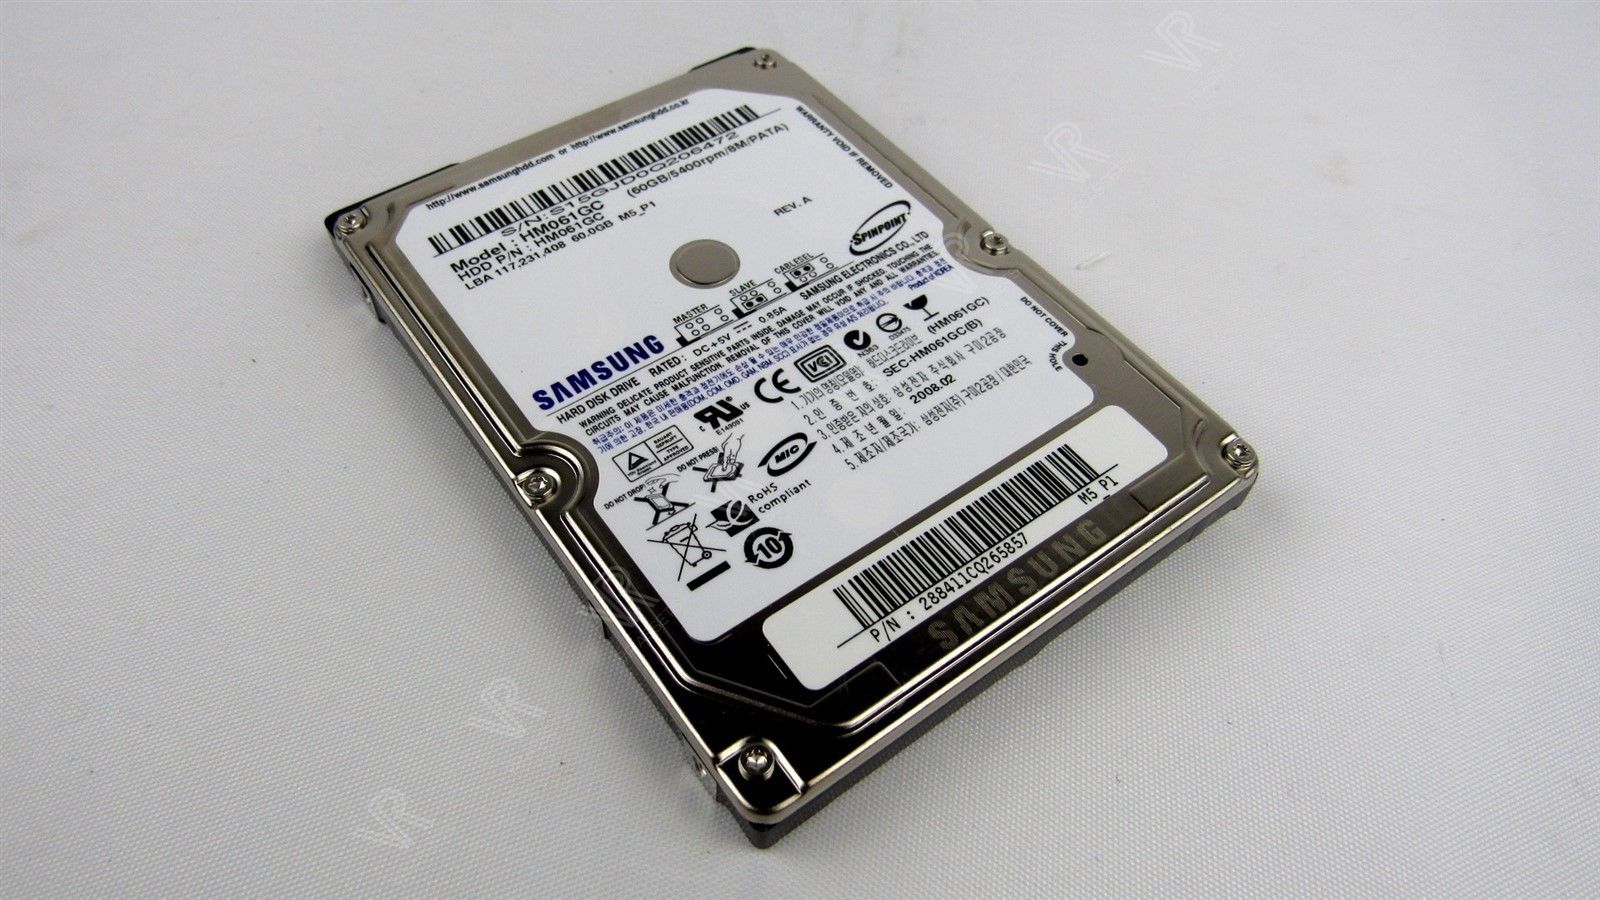 Samsung HM061GC 60GB Hard Drive 2.5" 8MB PATA IDE HDD 5400RPM